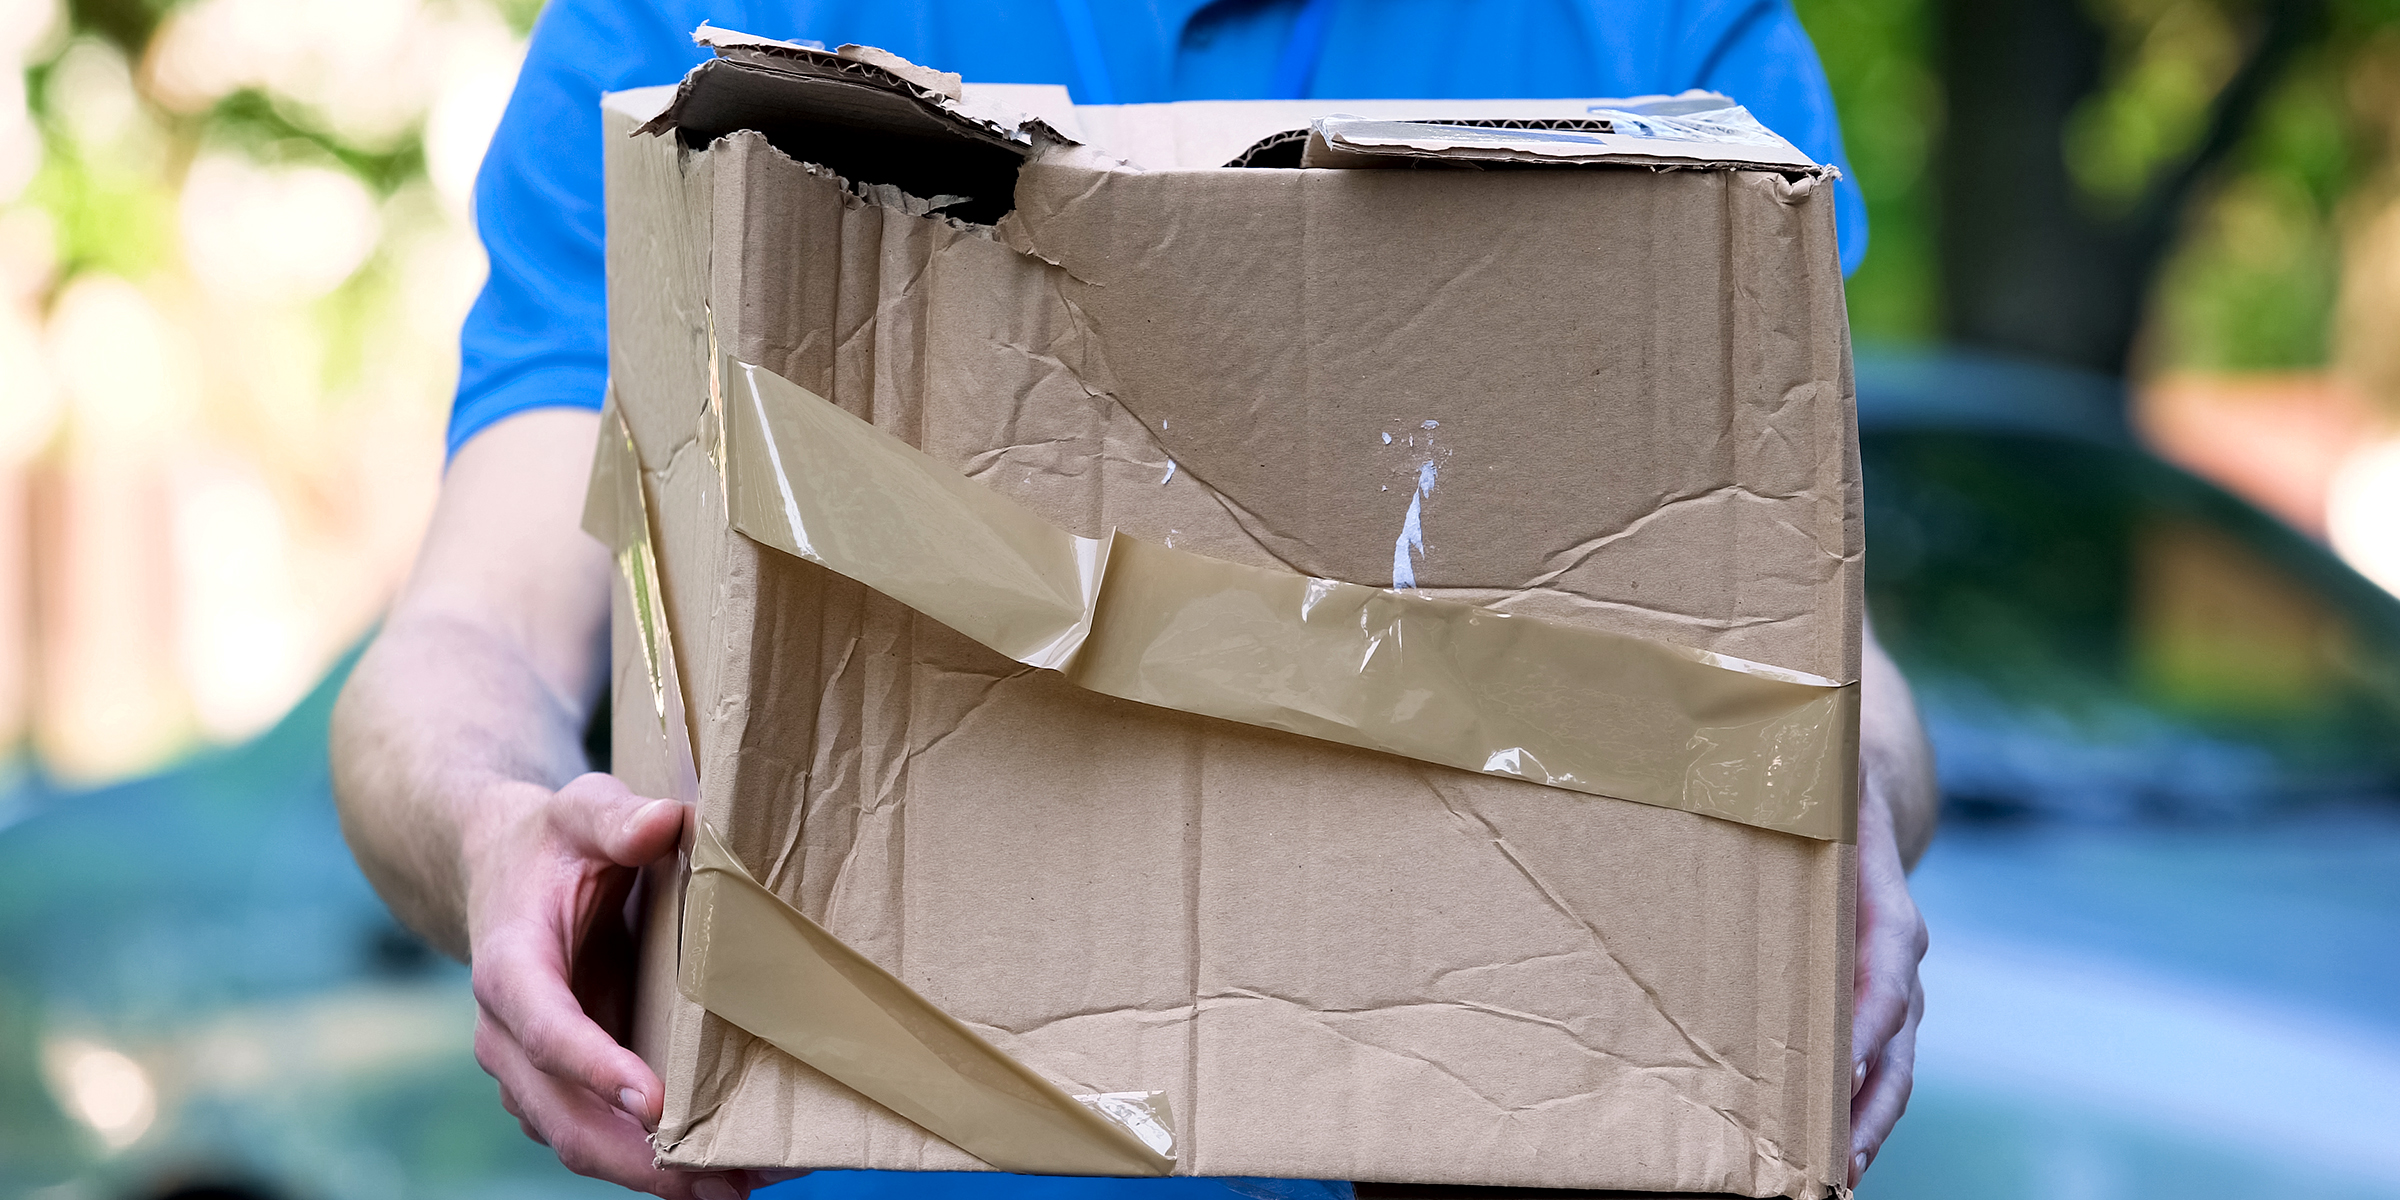 A dented parcel | Source: Shutterstock